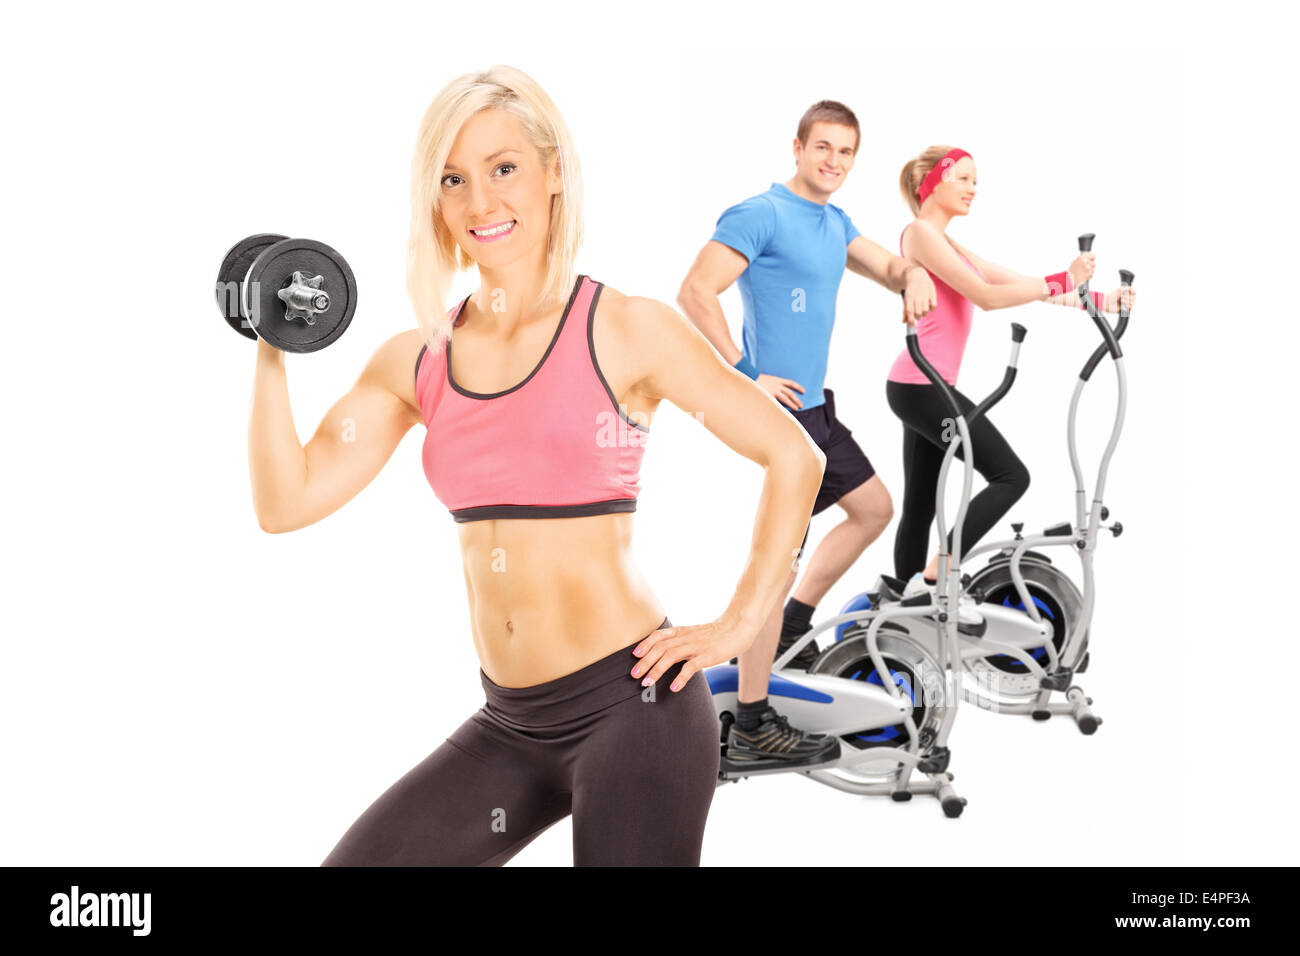 Three athletes exercising with fitness equipment Stock Photo